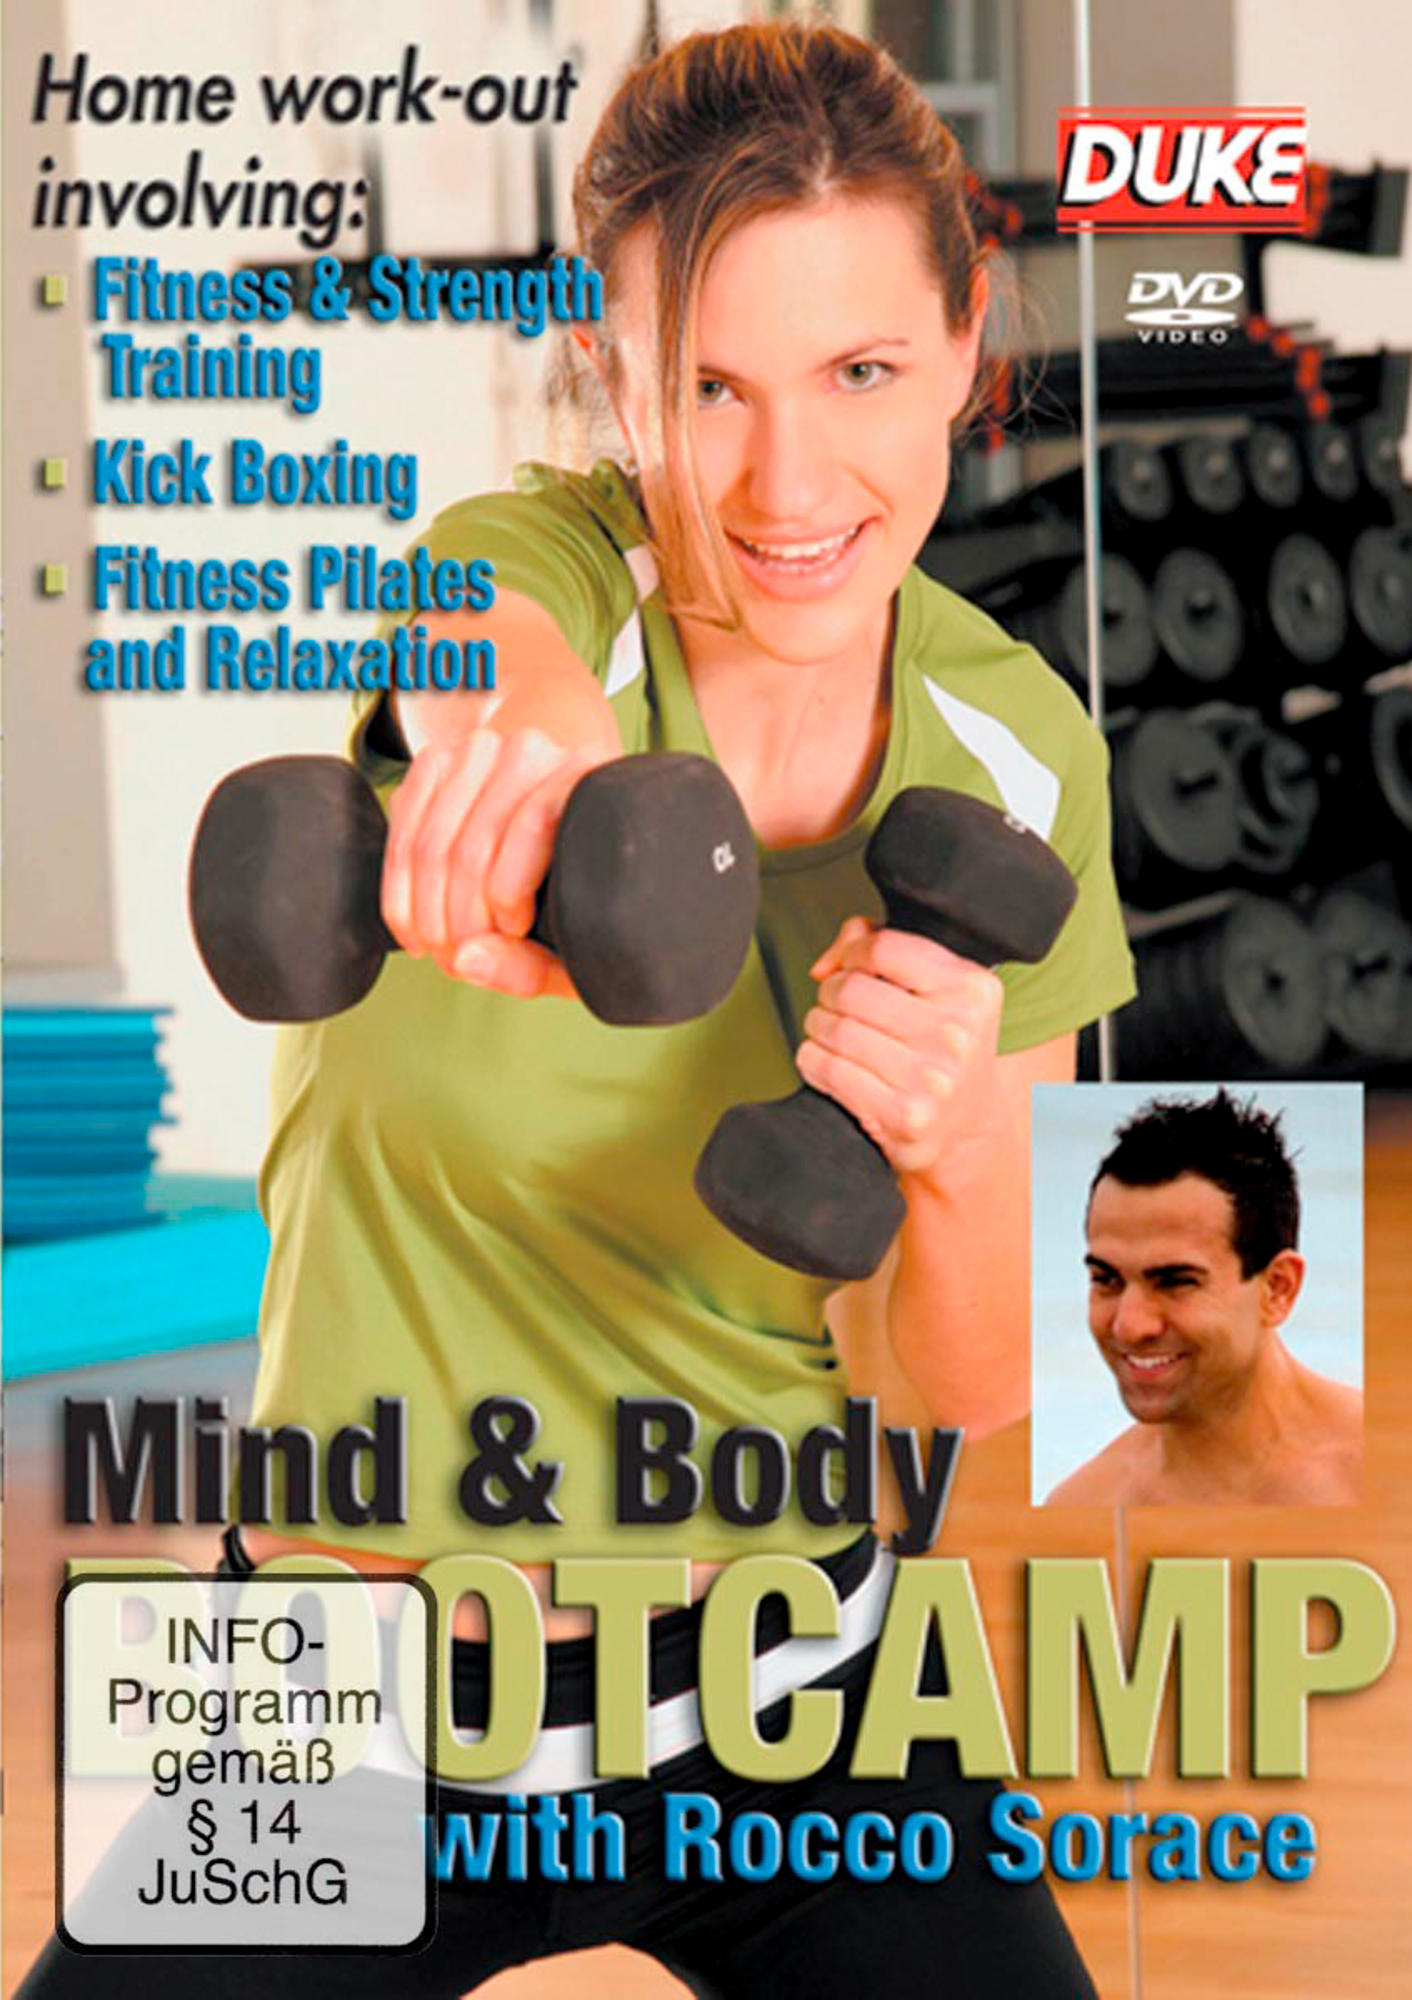 Mind & Body Bootcamp DVD